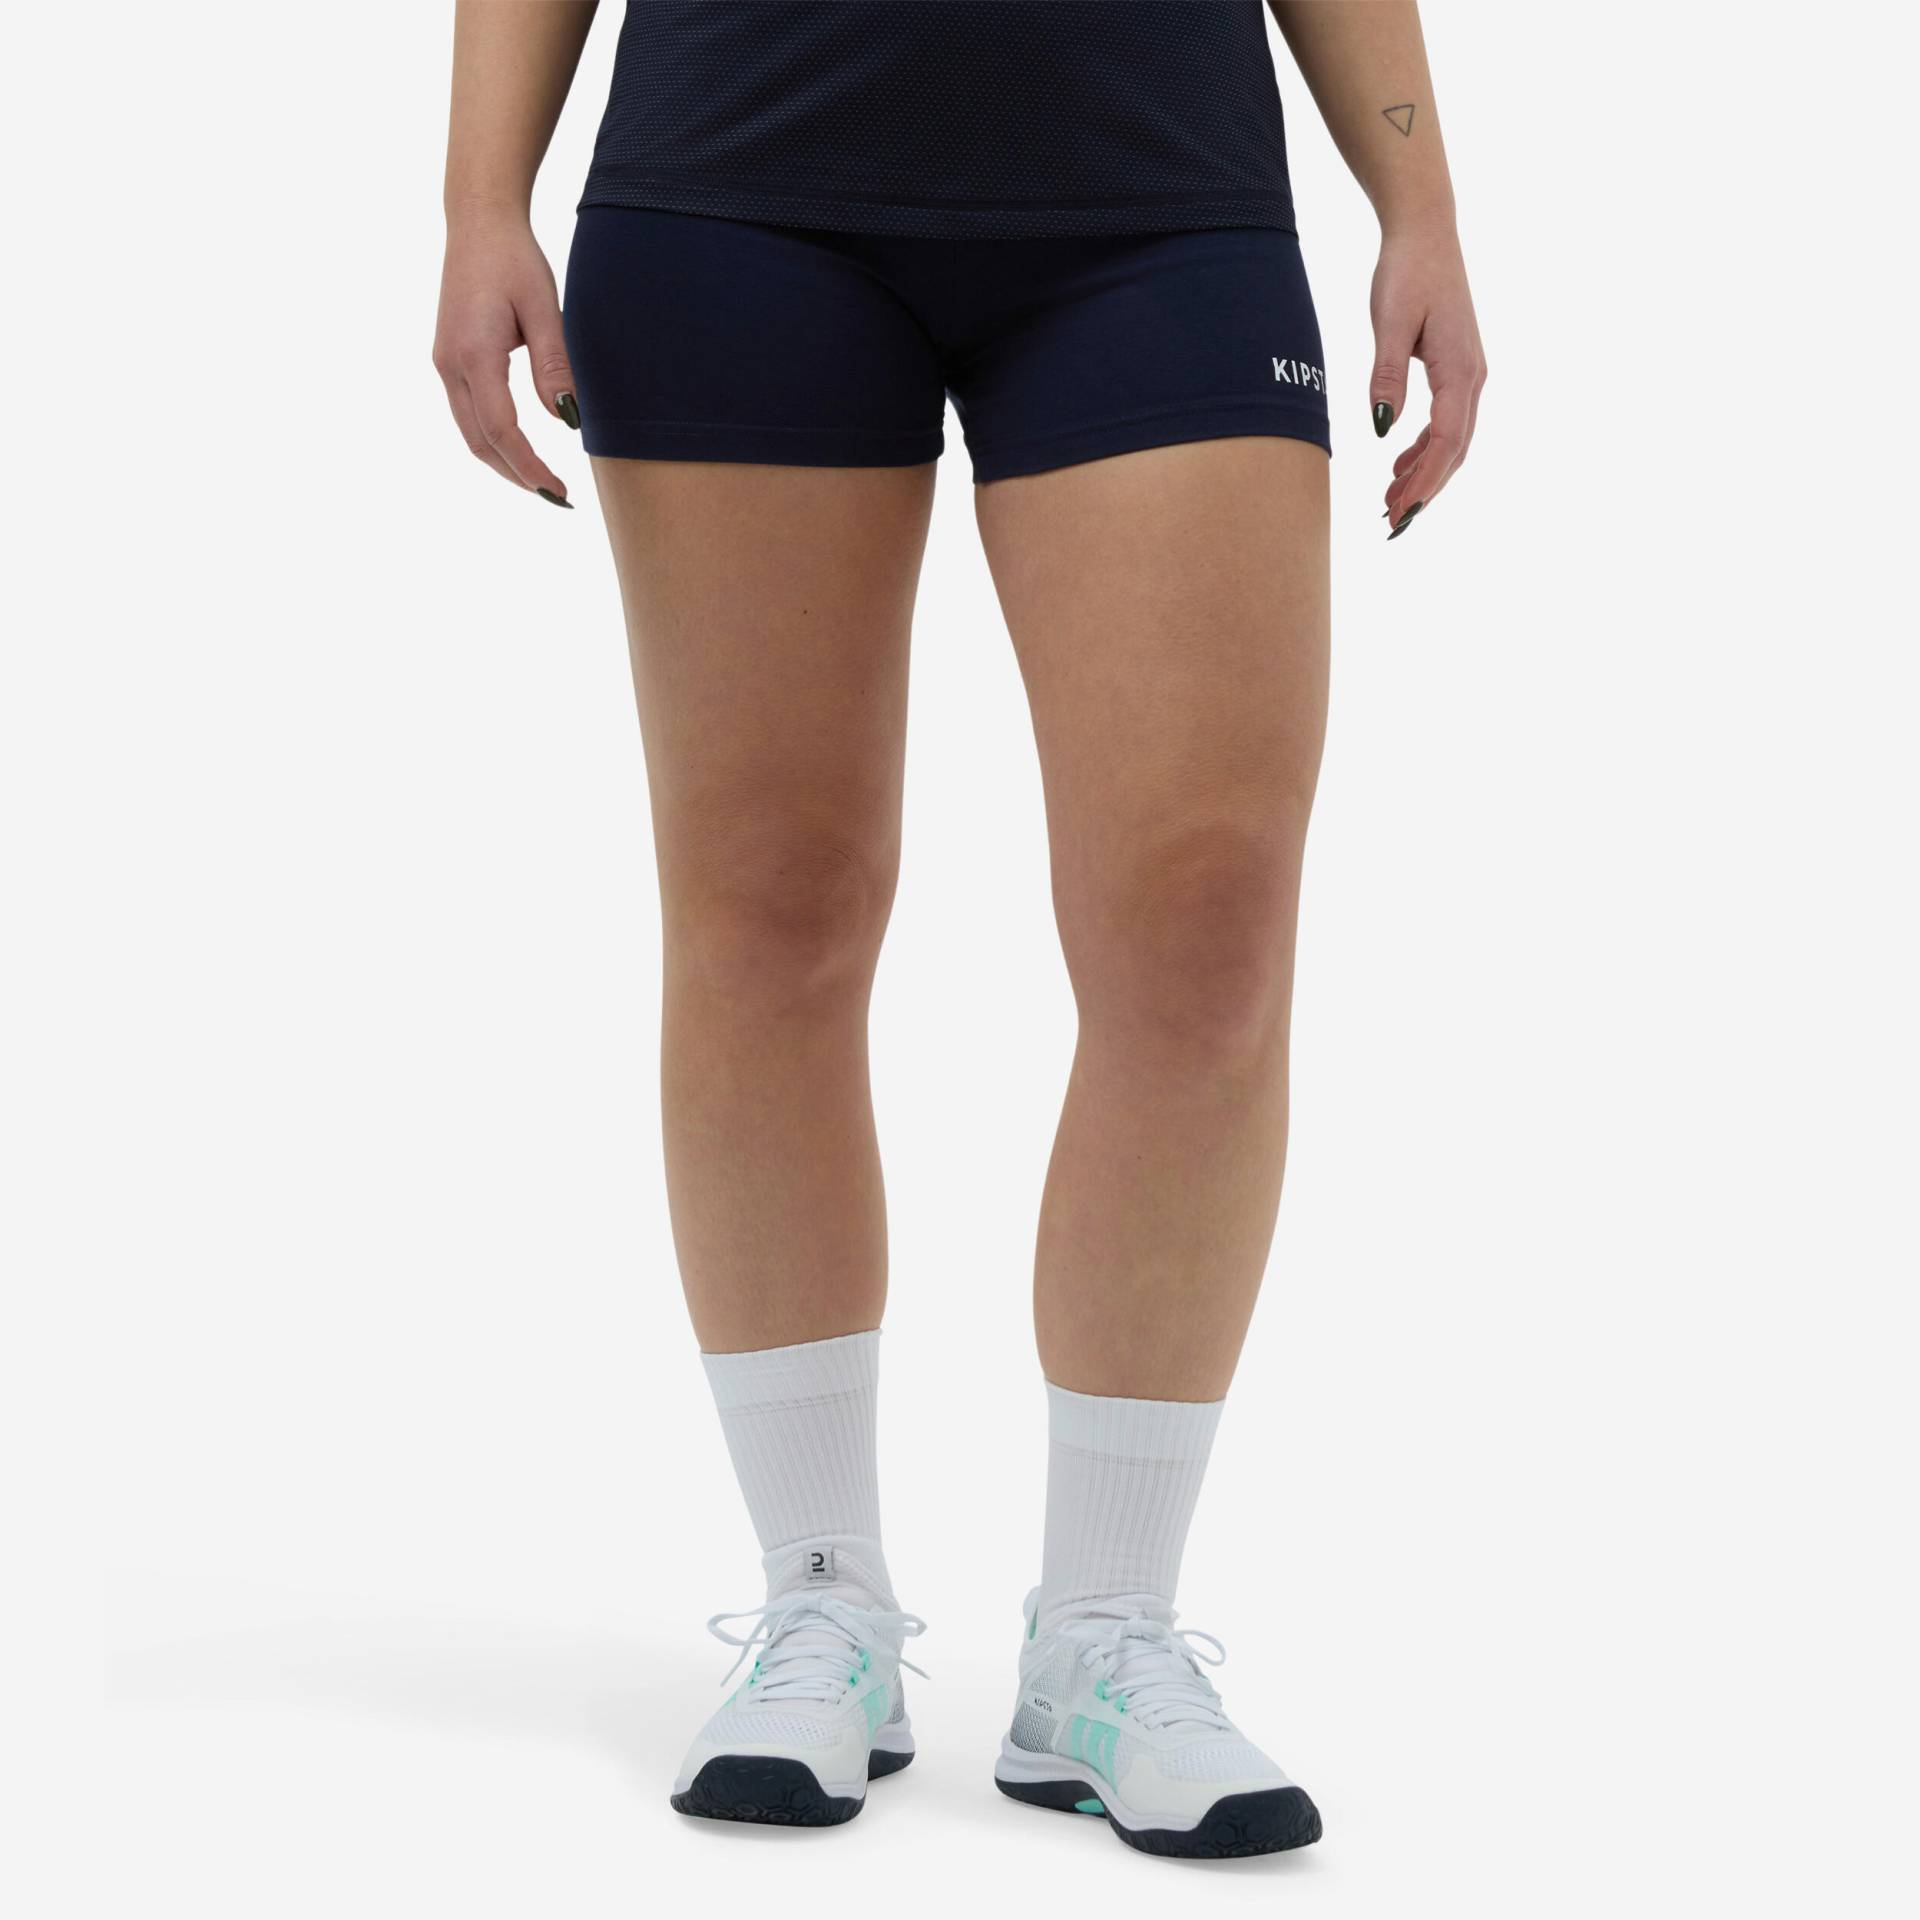 Damen Volleyball Shorts - VSH100 navy von ALLSIX